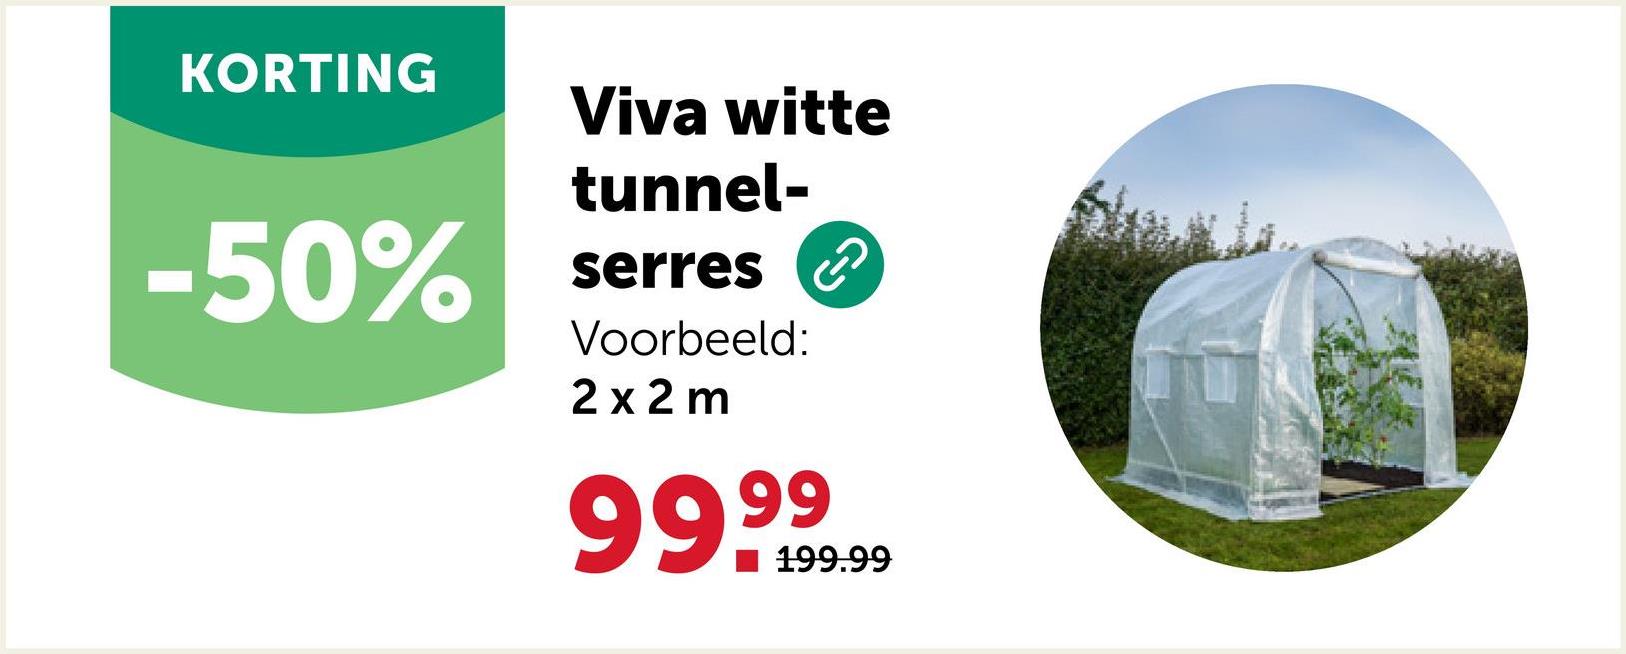 KORTING
-50%
Viva witte
tunnel-
serres
Voorbeeld:
2x2m
999⁹99999